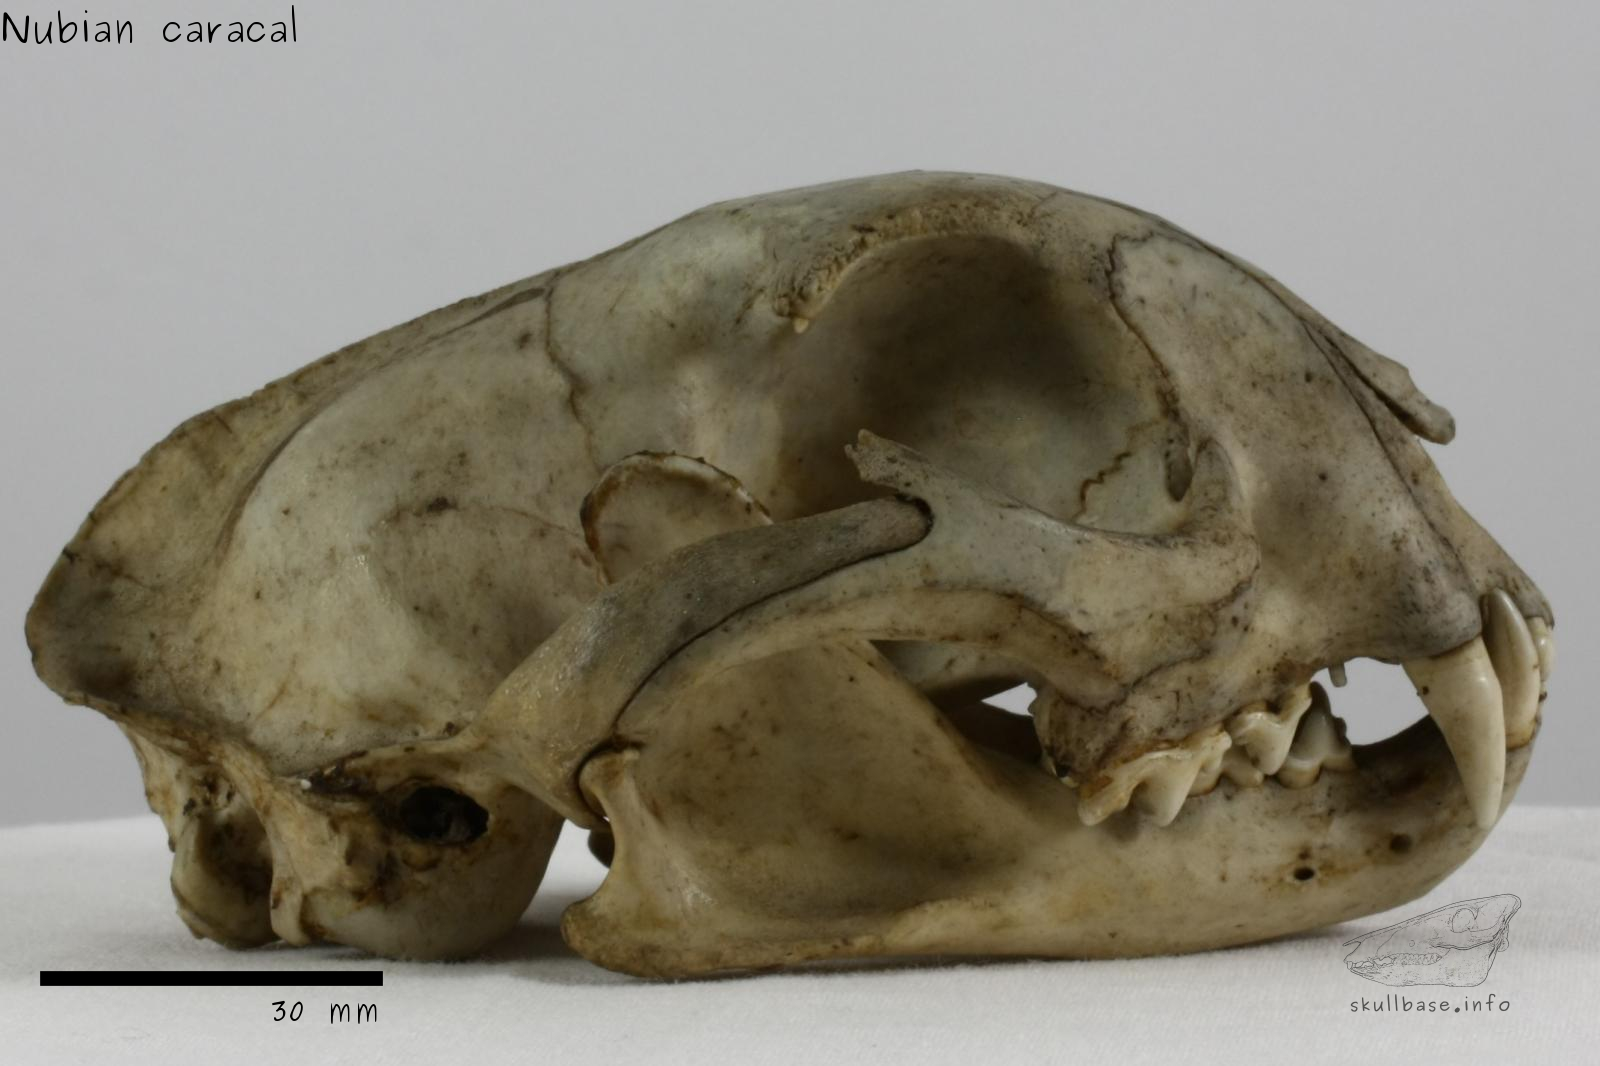 Nubian caracal (Caracal caracal nubica) skull lateral view